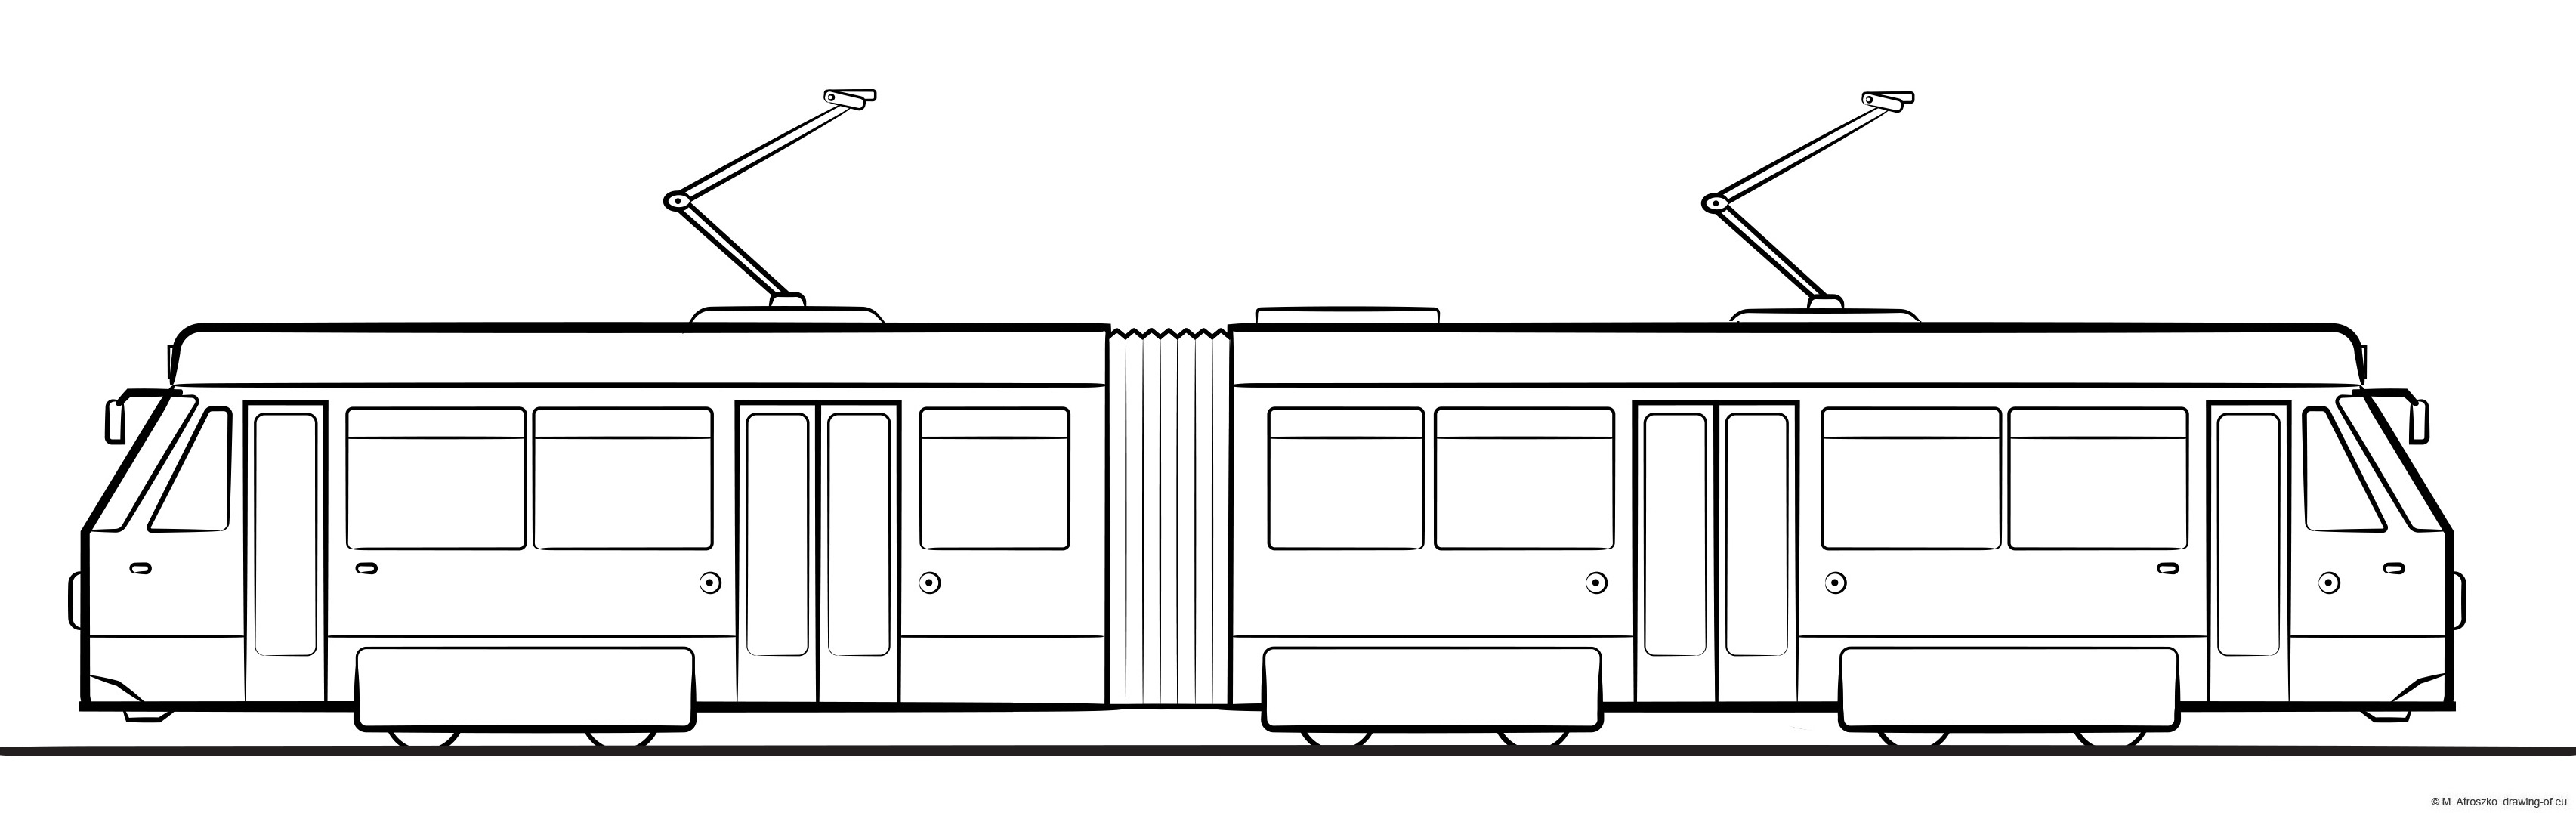 tram - streetcar - illustration